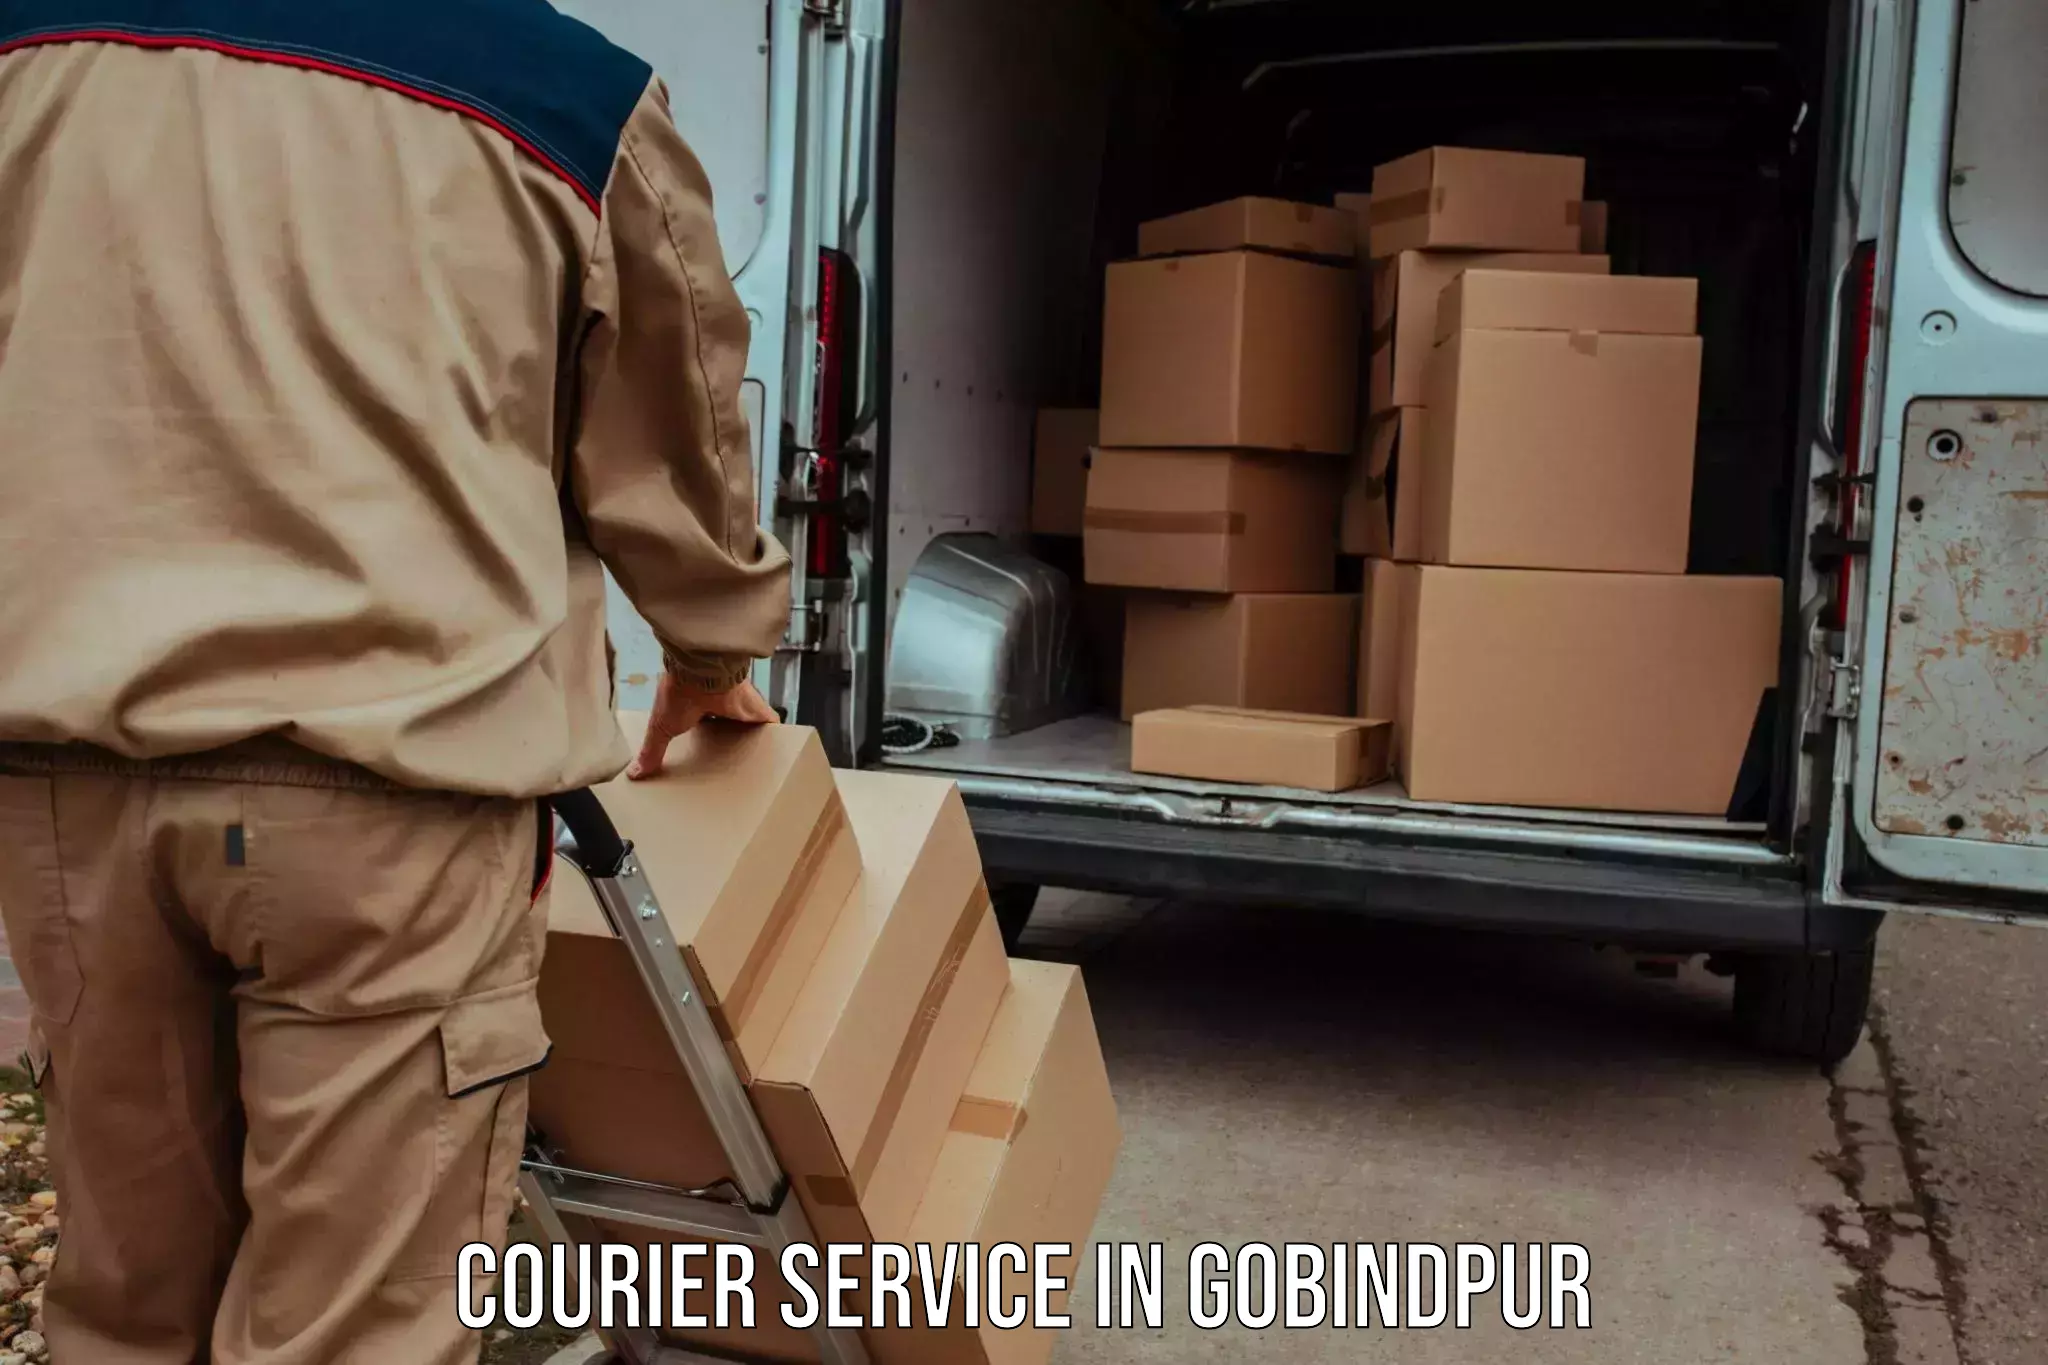 Flexible delivery schedules in Gobindpur